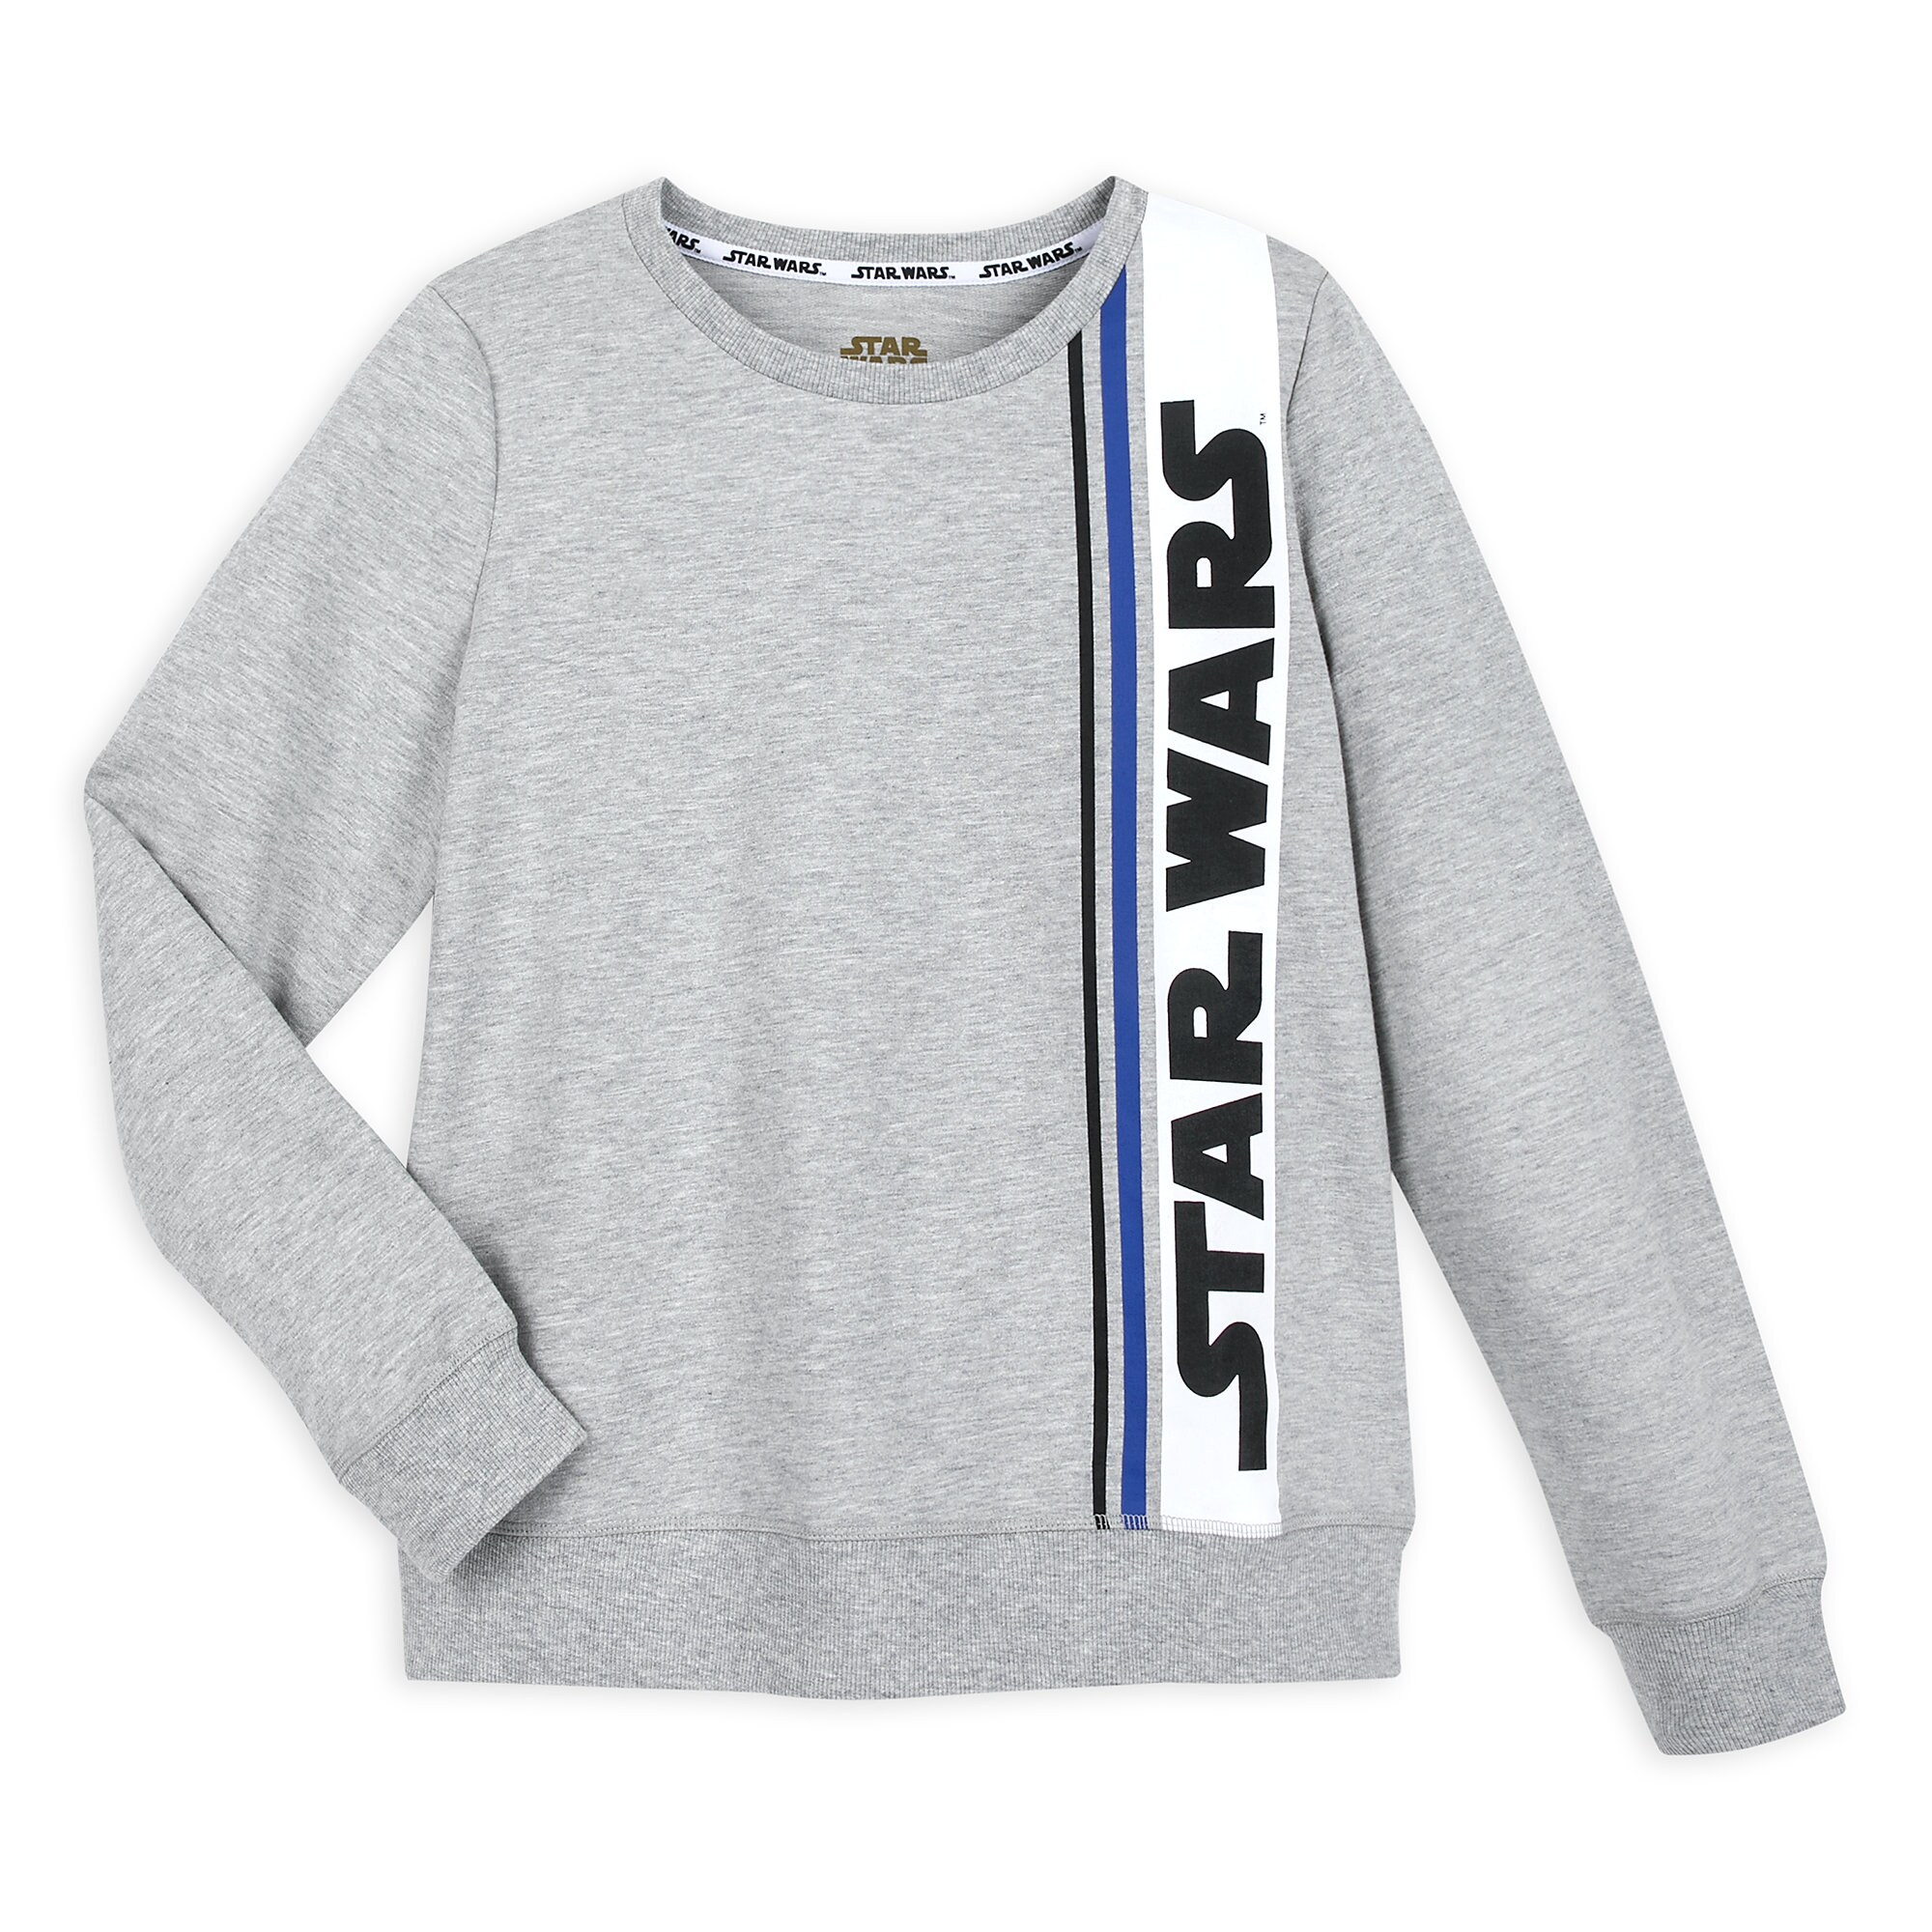 Star Wars Logo Sweatshirt for Women now out – Dis Merchandise News